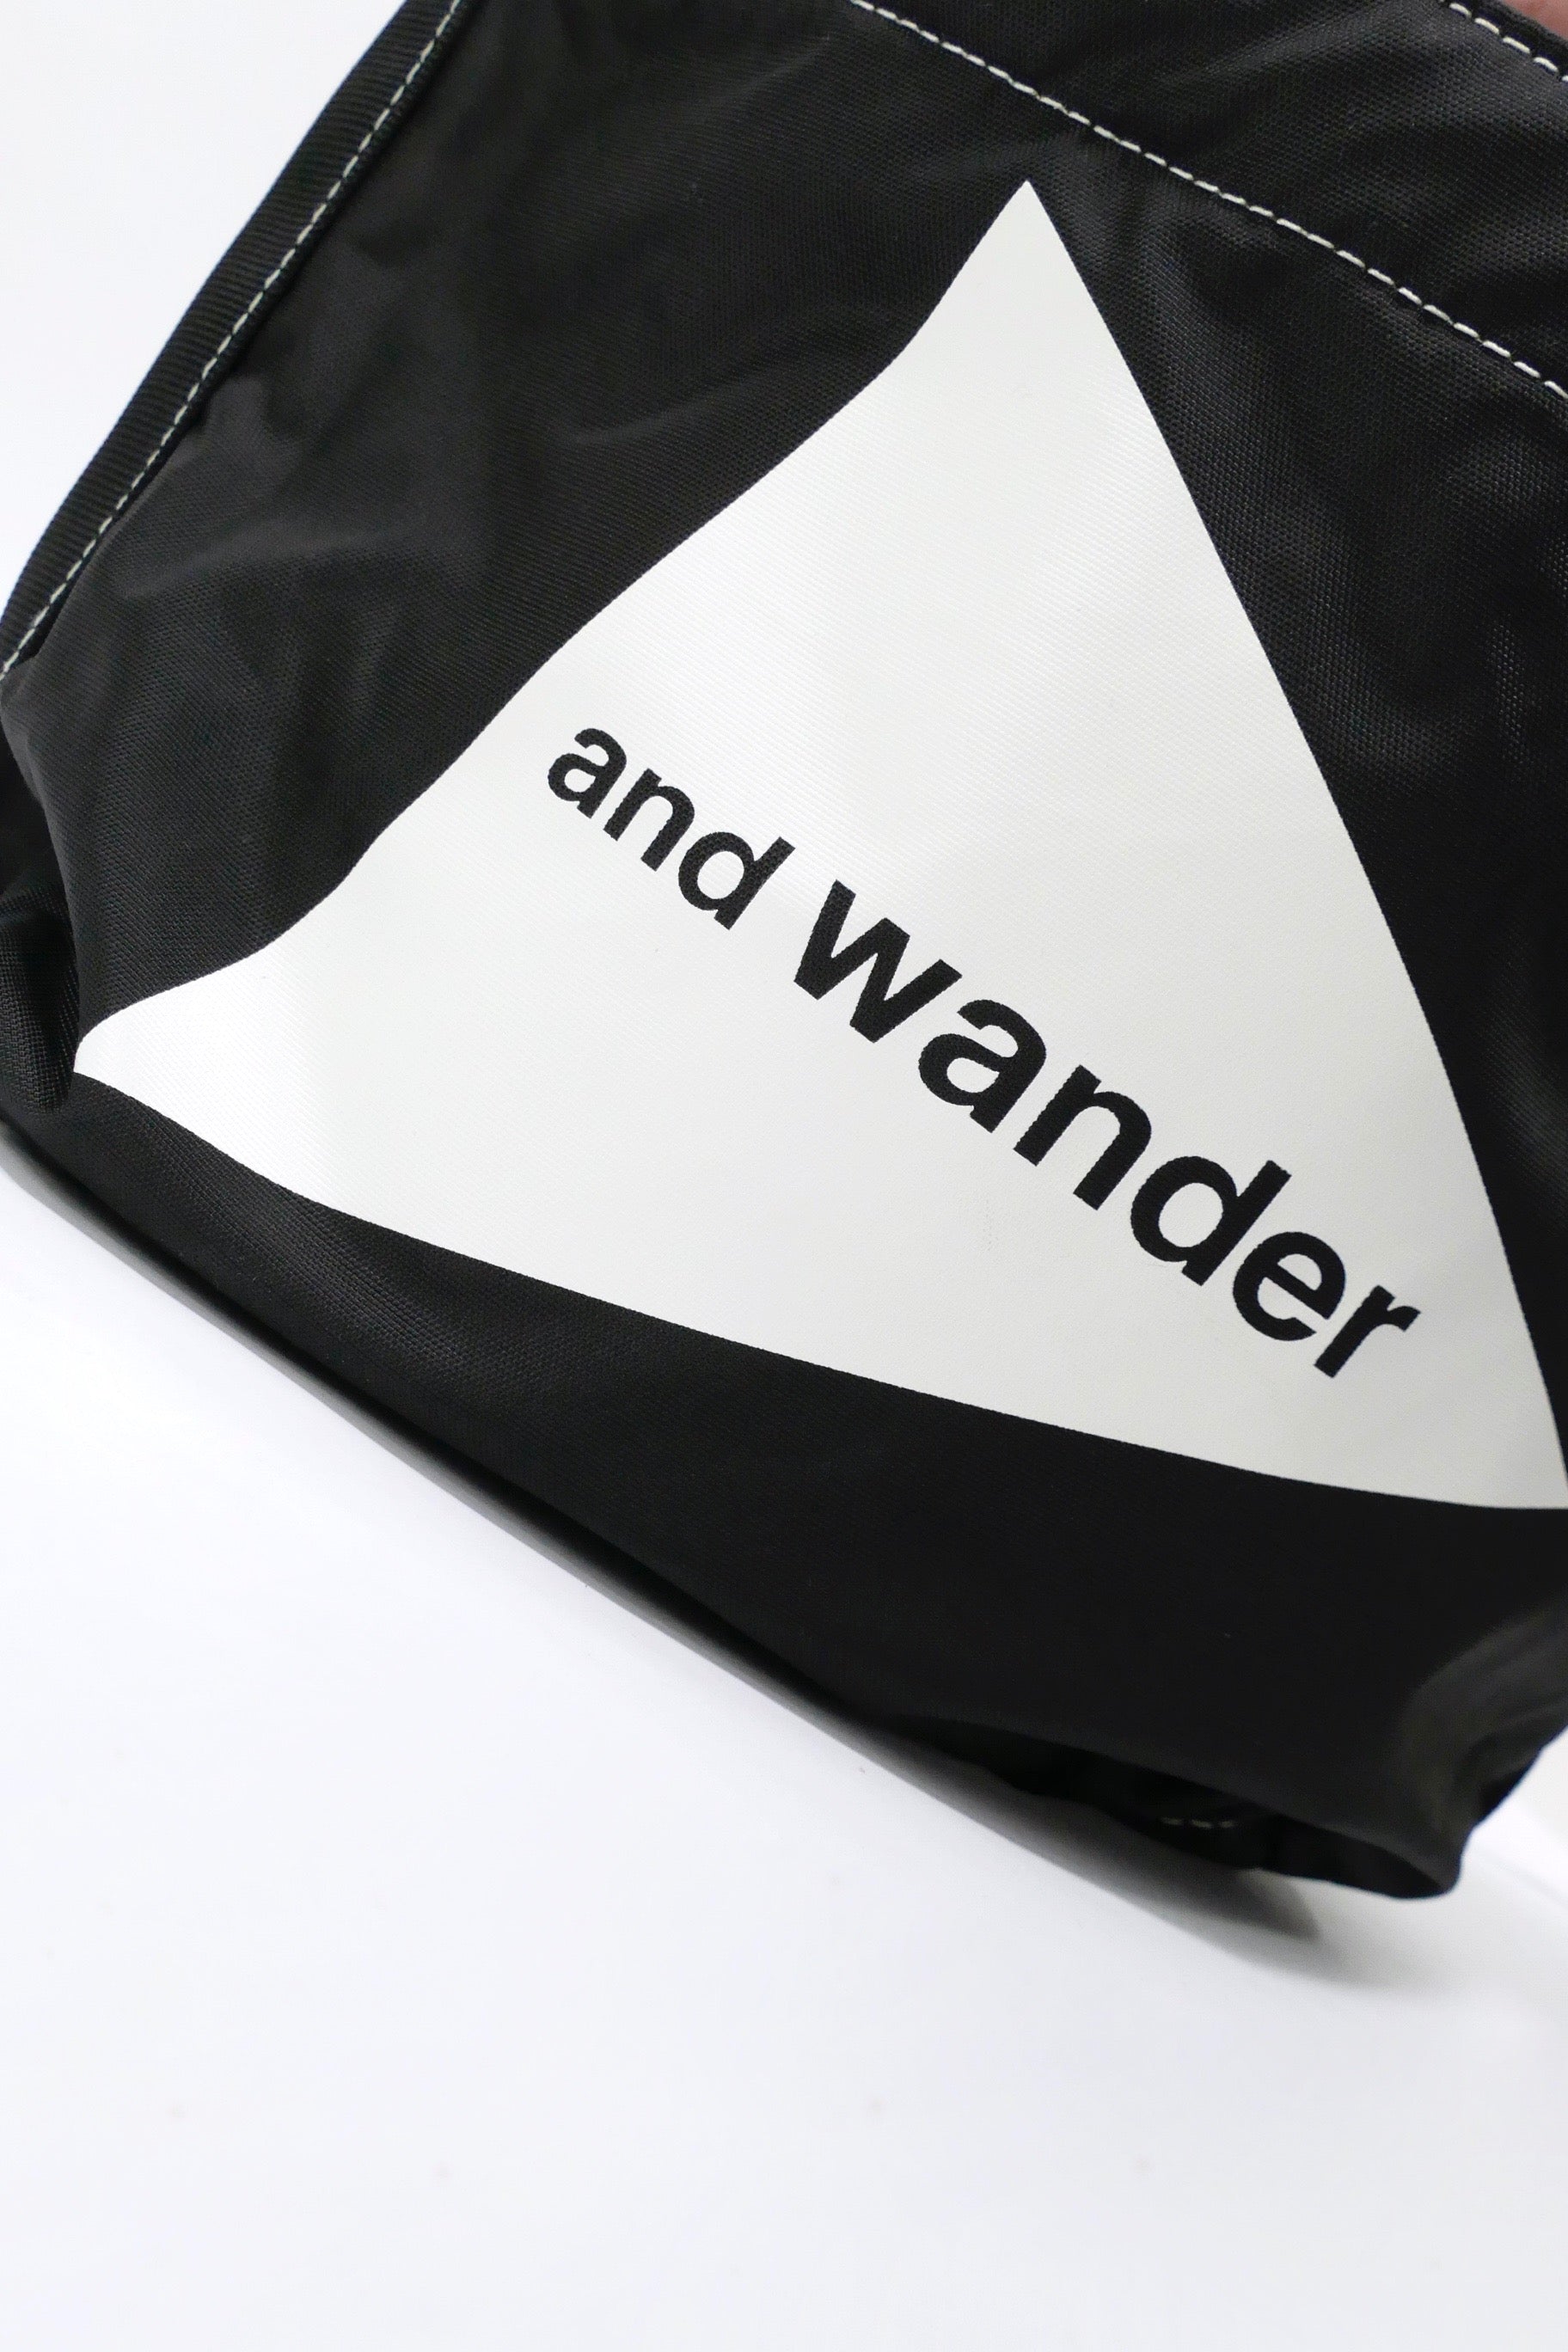 And Wander Mens Japanese CORDURA Logo Tote Bag Black